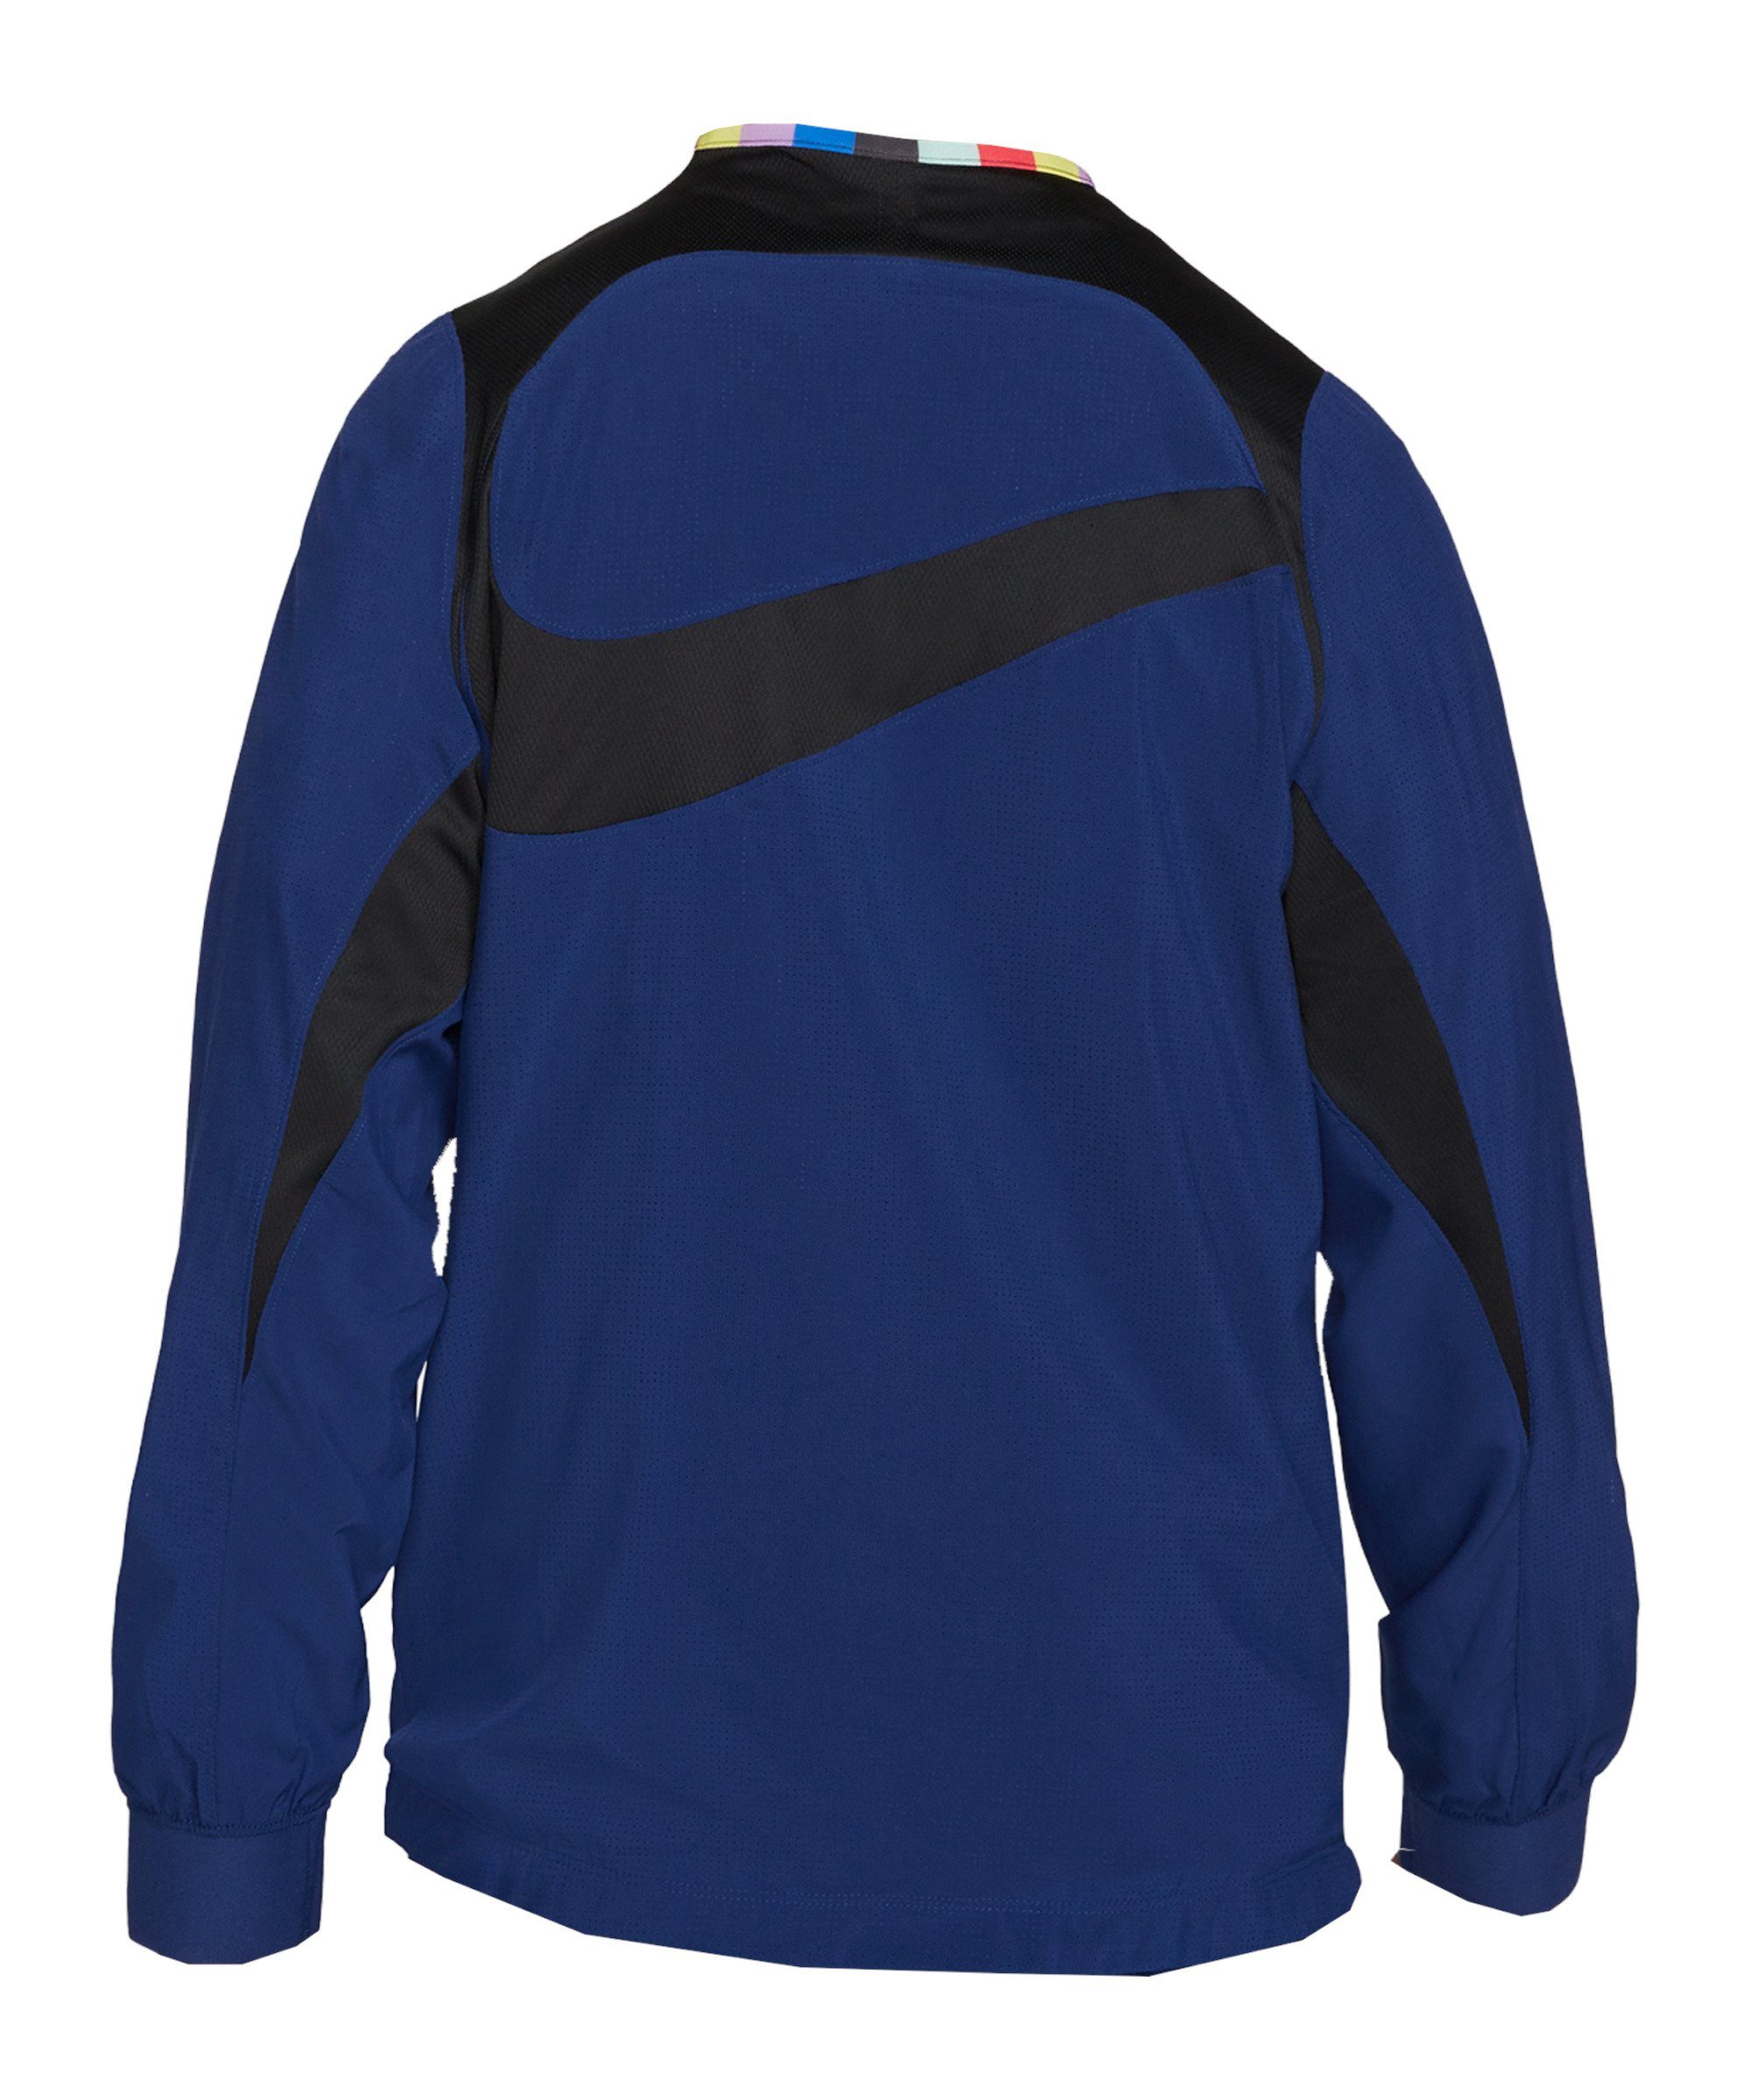 Woven F.C. Nike Sweatjacke Bonito Jacke blauschwarz Joga Sportswear